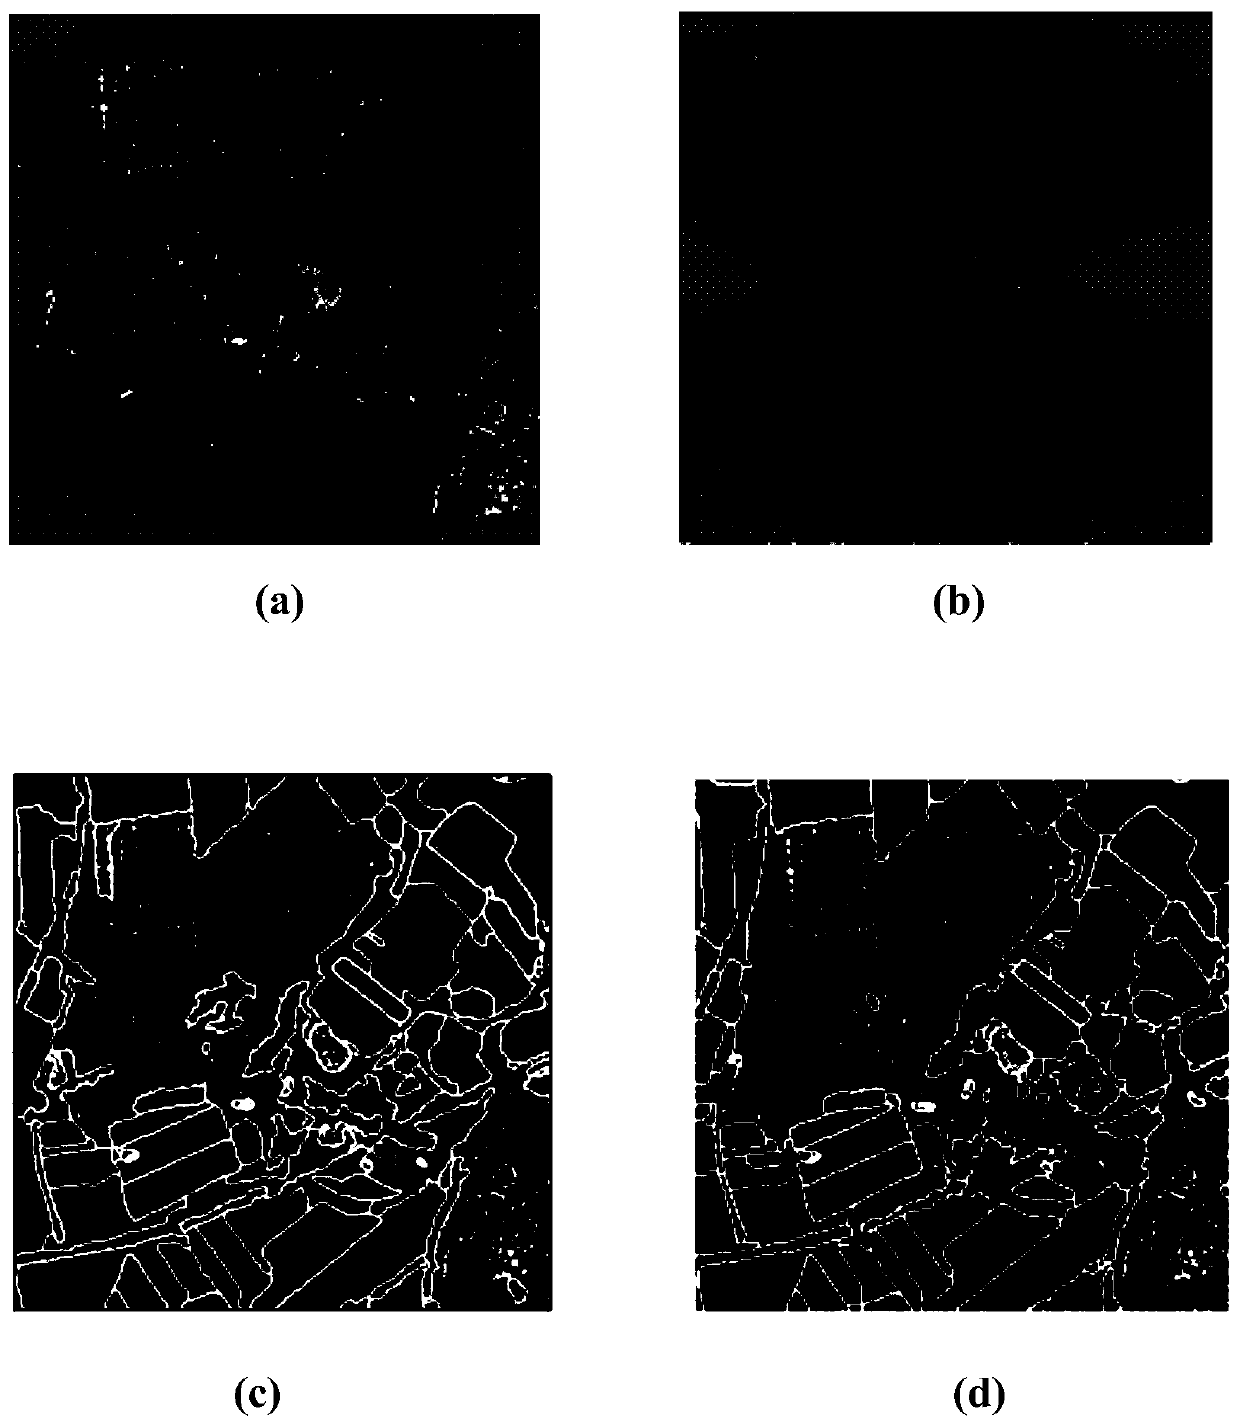 SAR image segmentation method based on Bhattacharyya distance and texture mode measurement